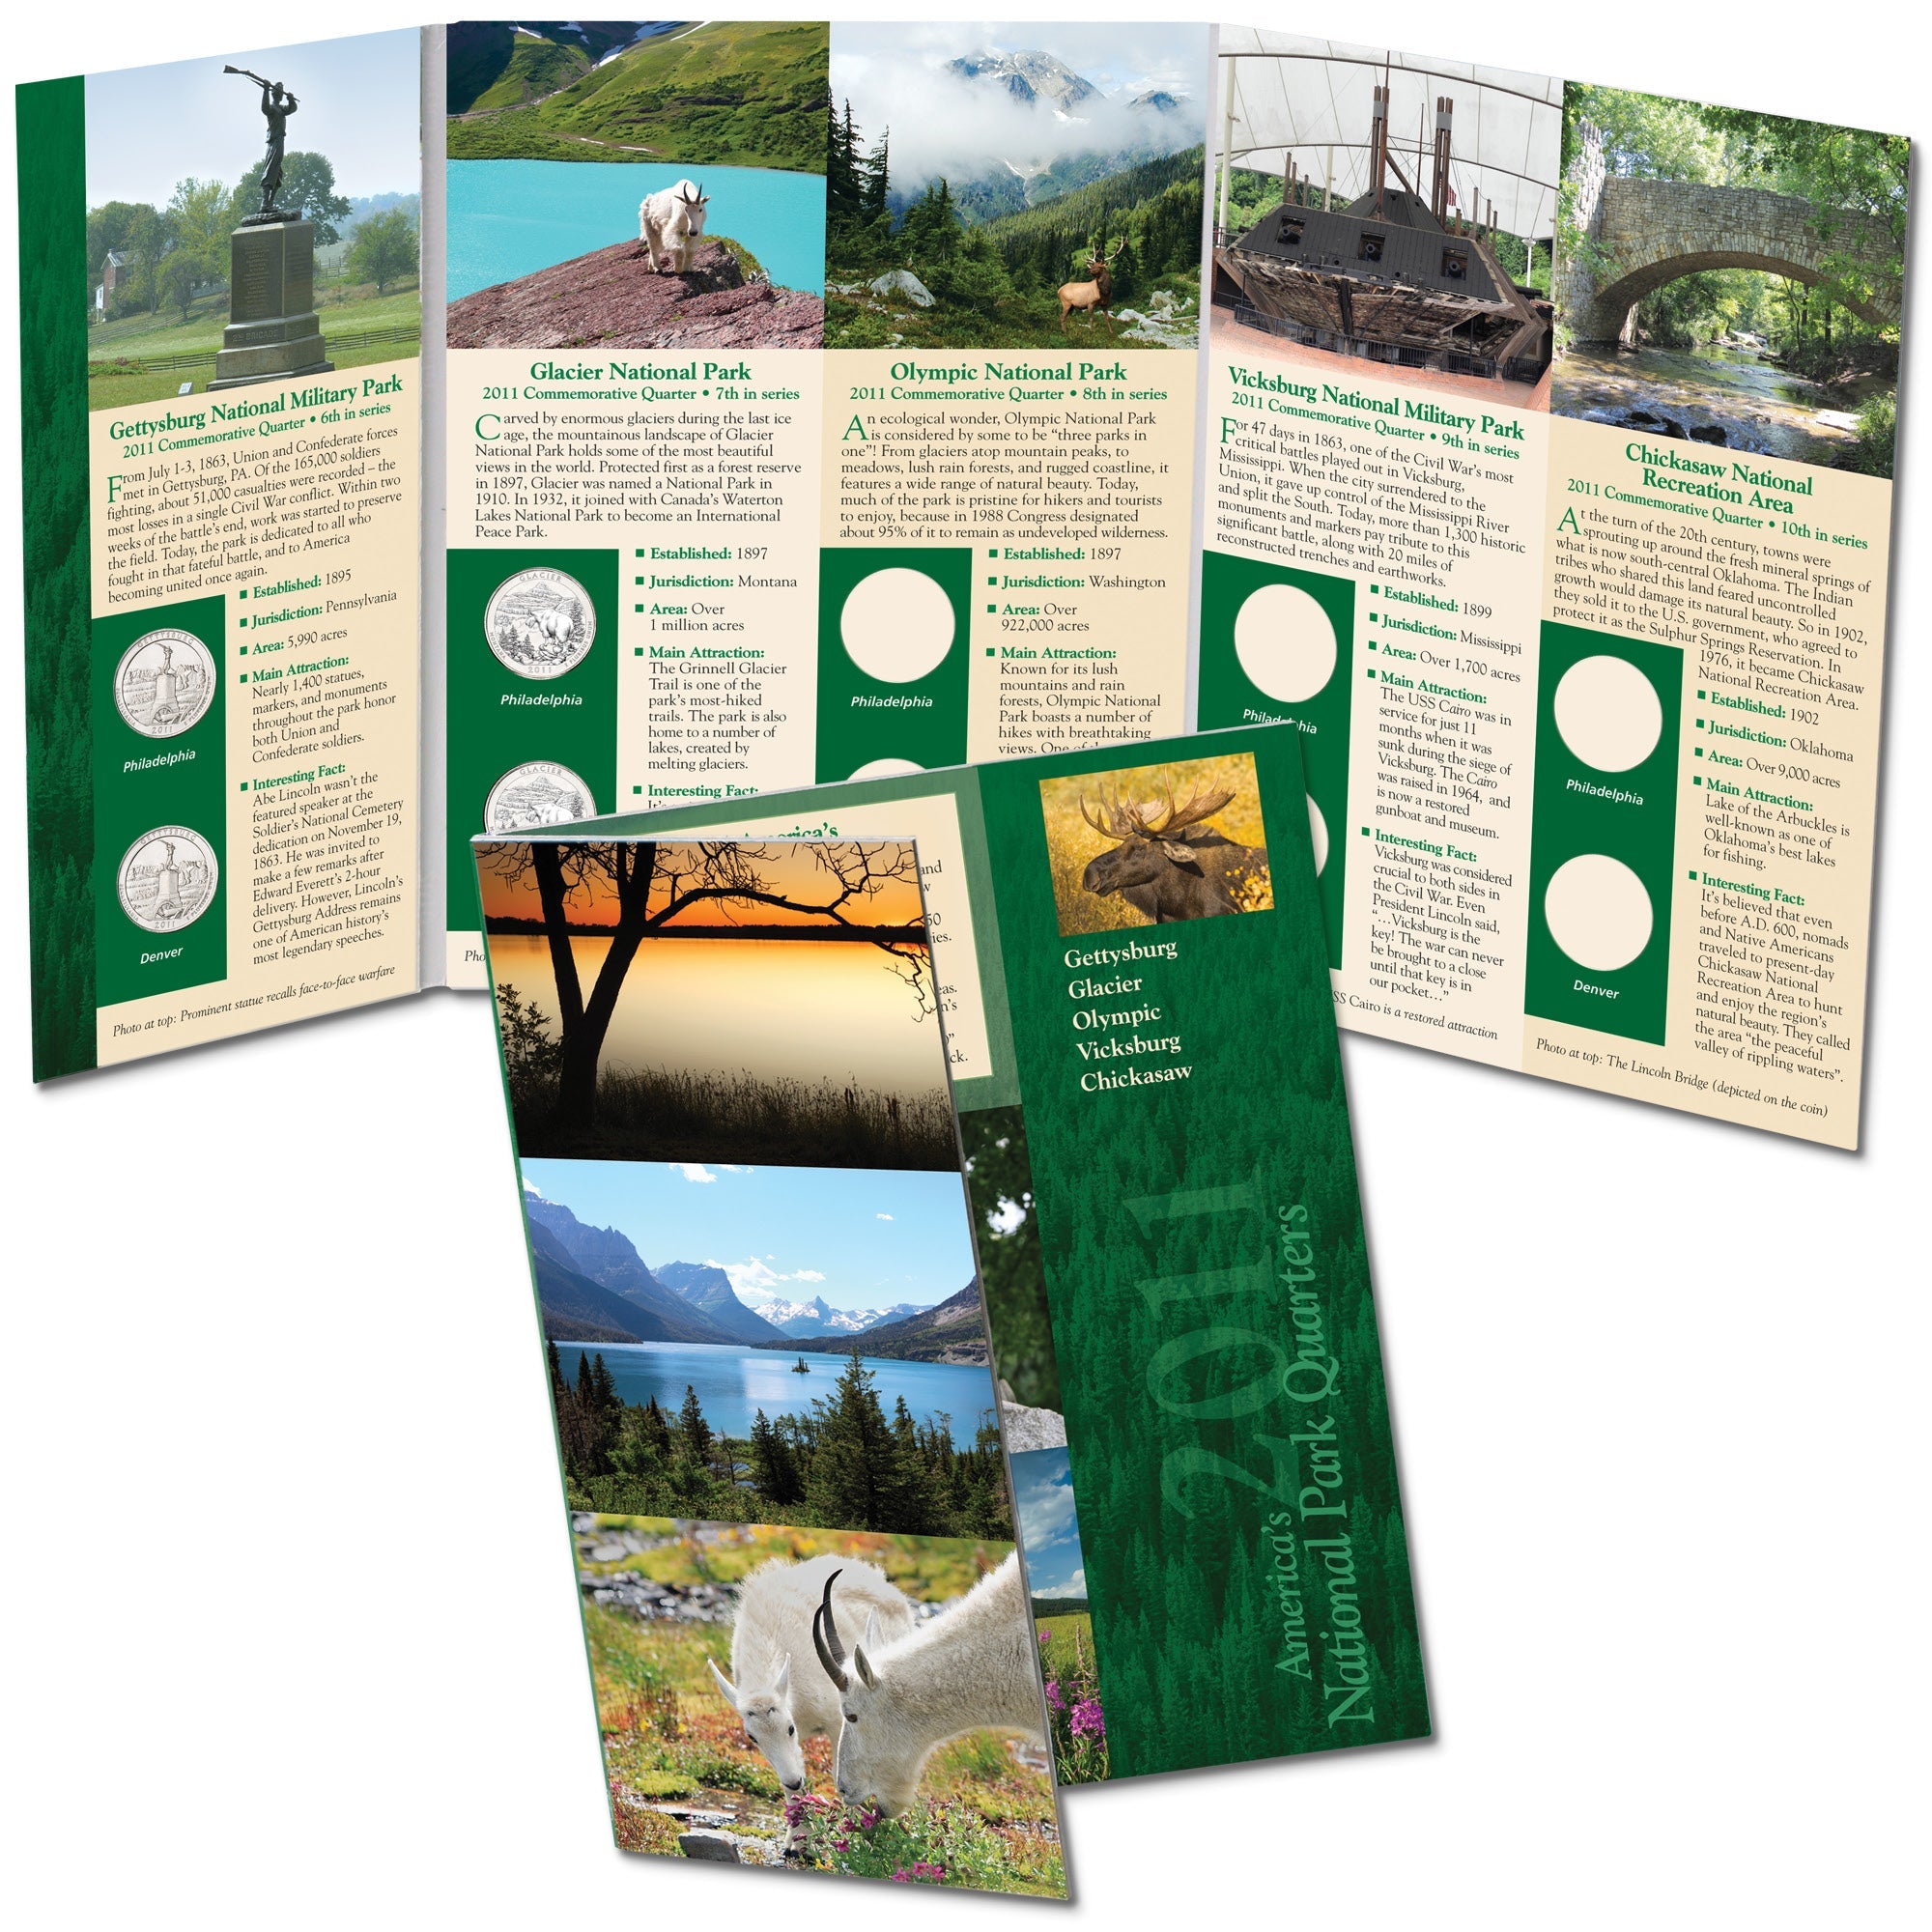 2011 America's National Park Quarter Series Colorful Folder Littleton